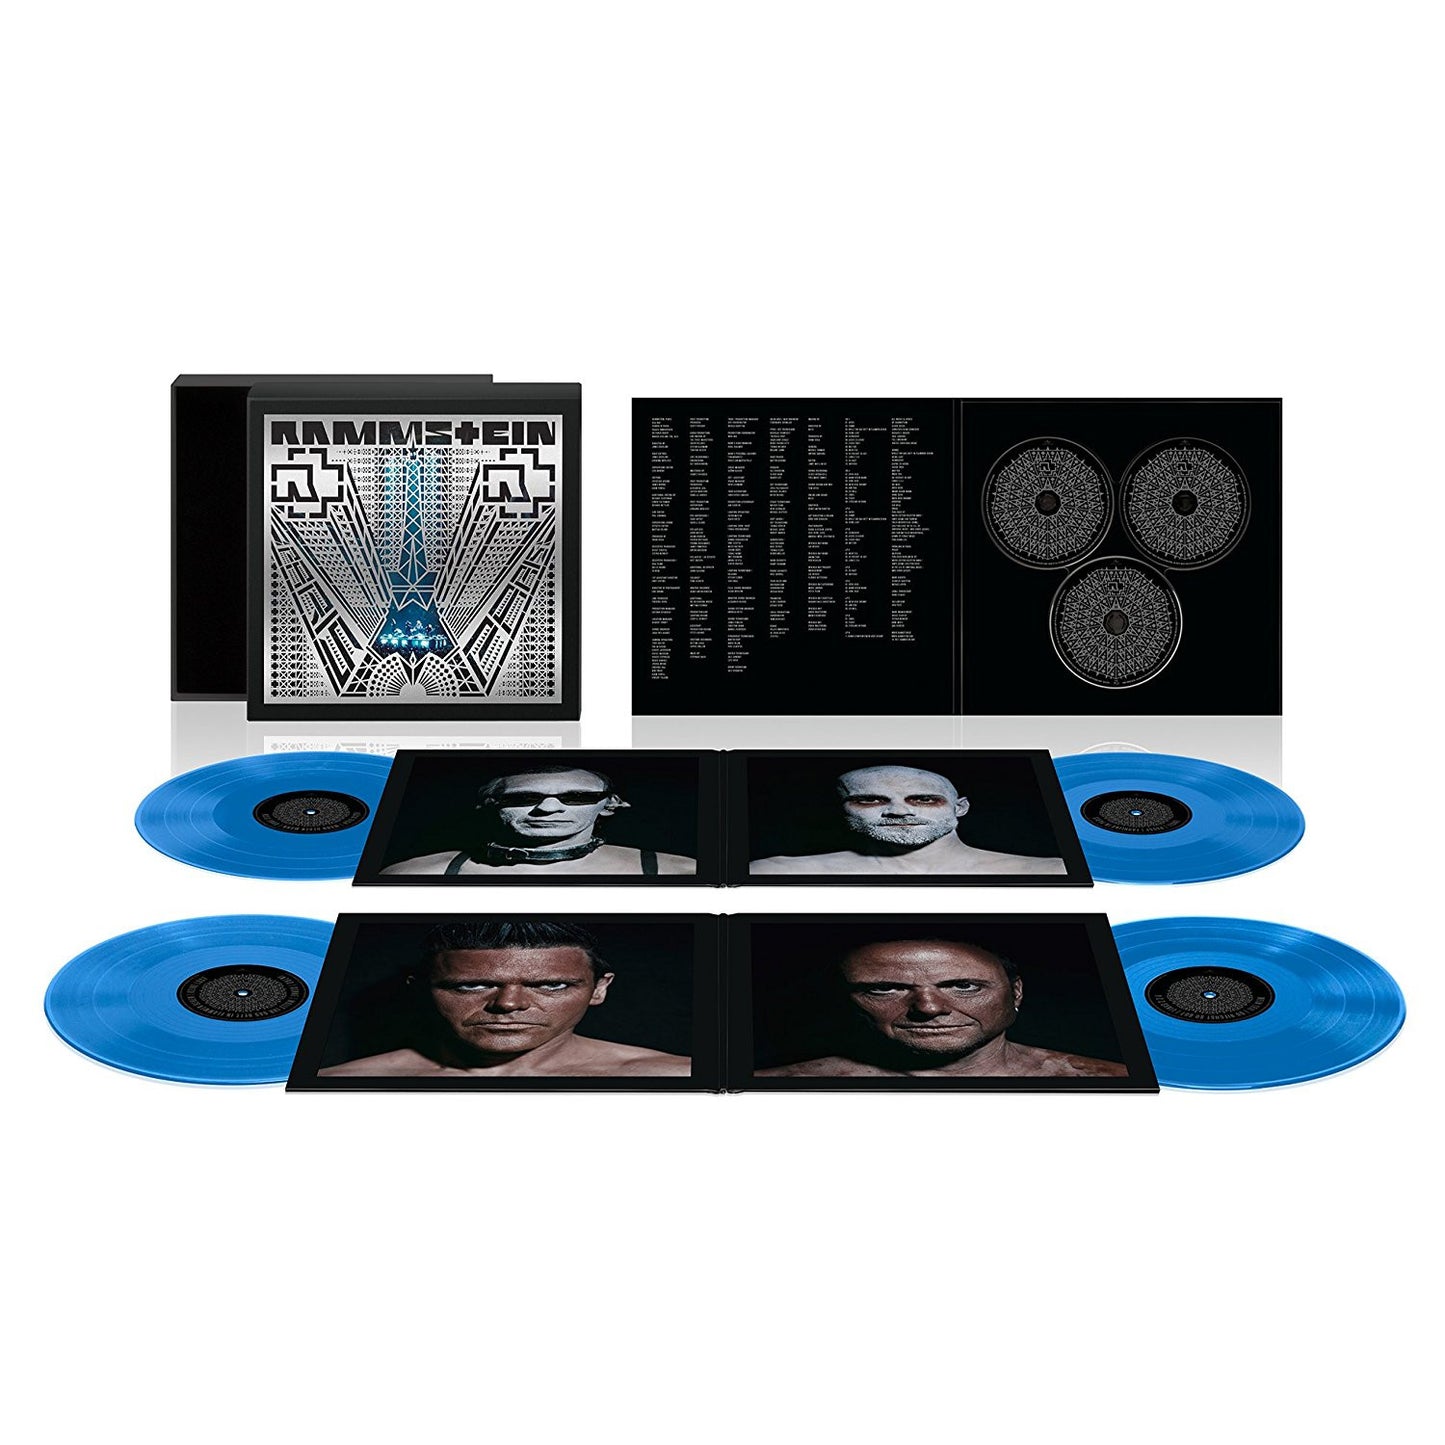 Rammstein - Paris - Deluxe Box Edition